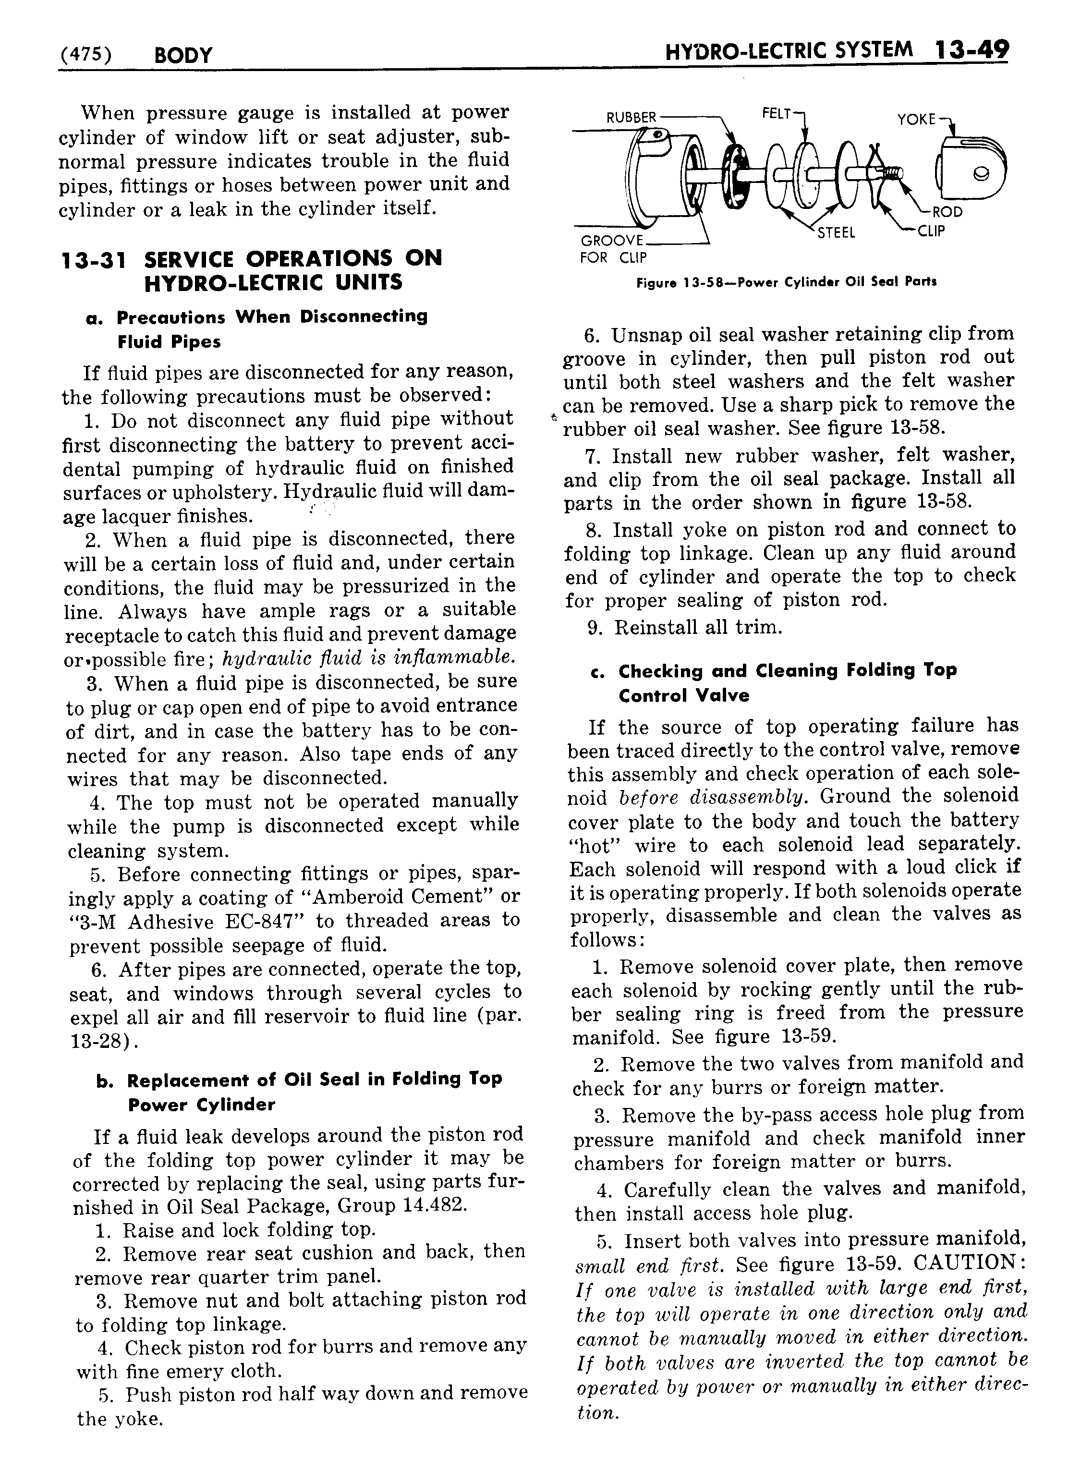 n_14 1951 Buick Shop Manual - Body-049-049.jpg